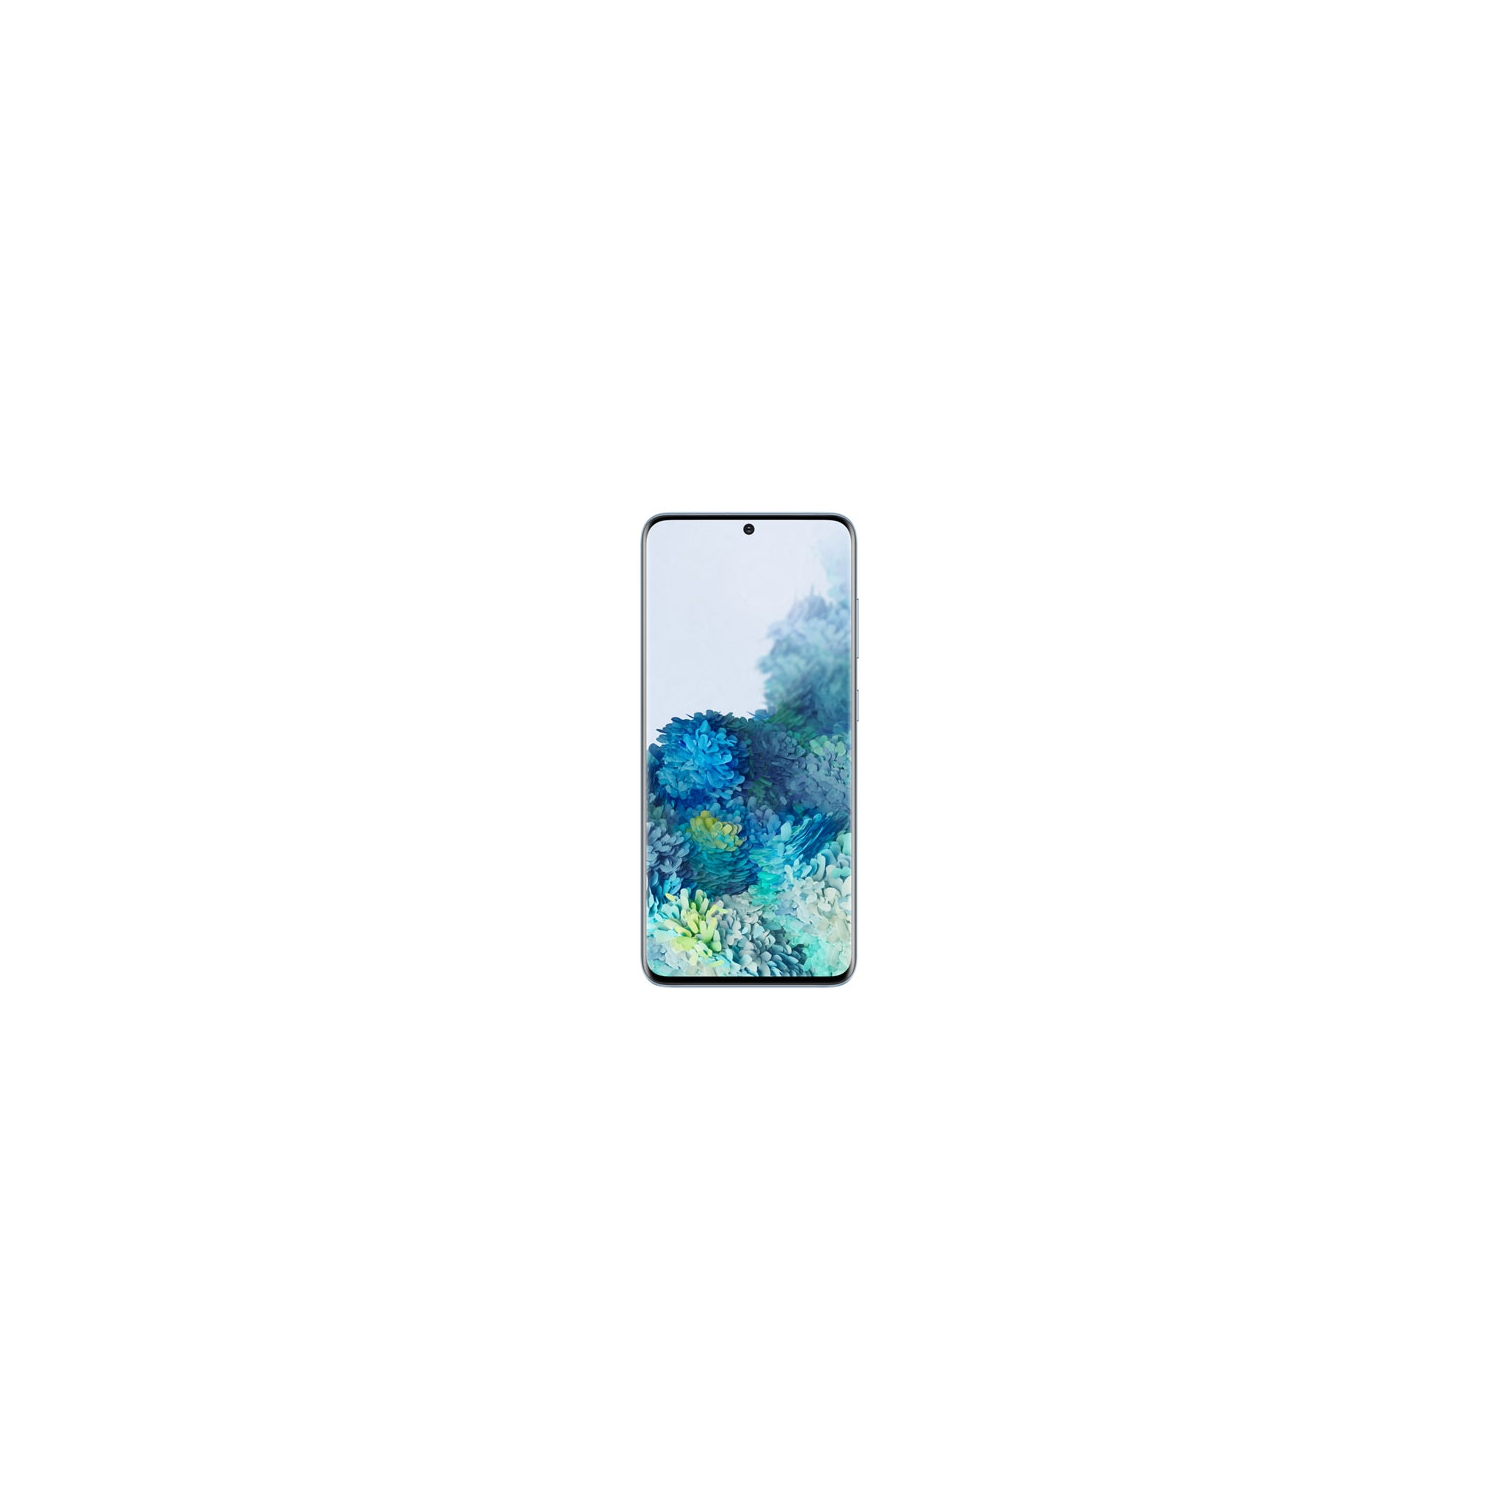 Refurbished (Good) - Samsung Galaxy S20 5G 128GB Smartphone - Cloud Blue - Unlocked